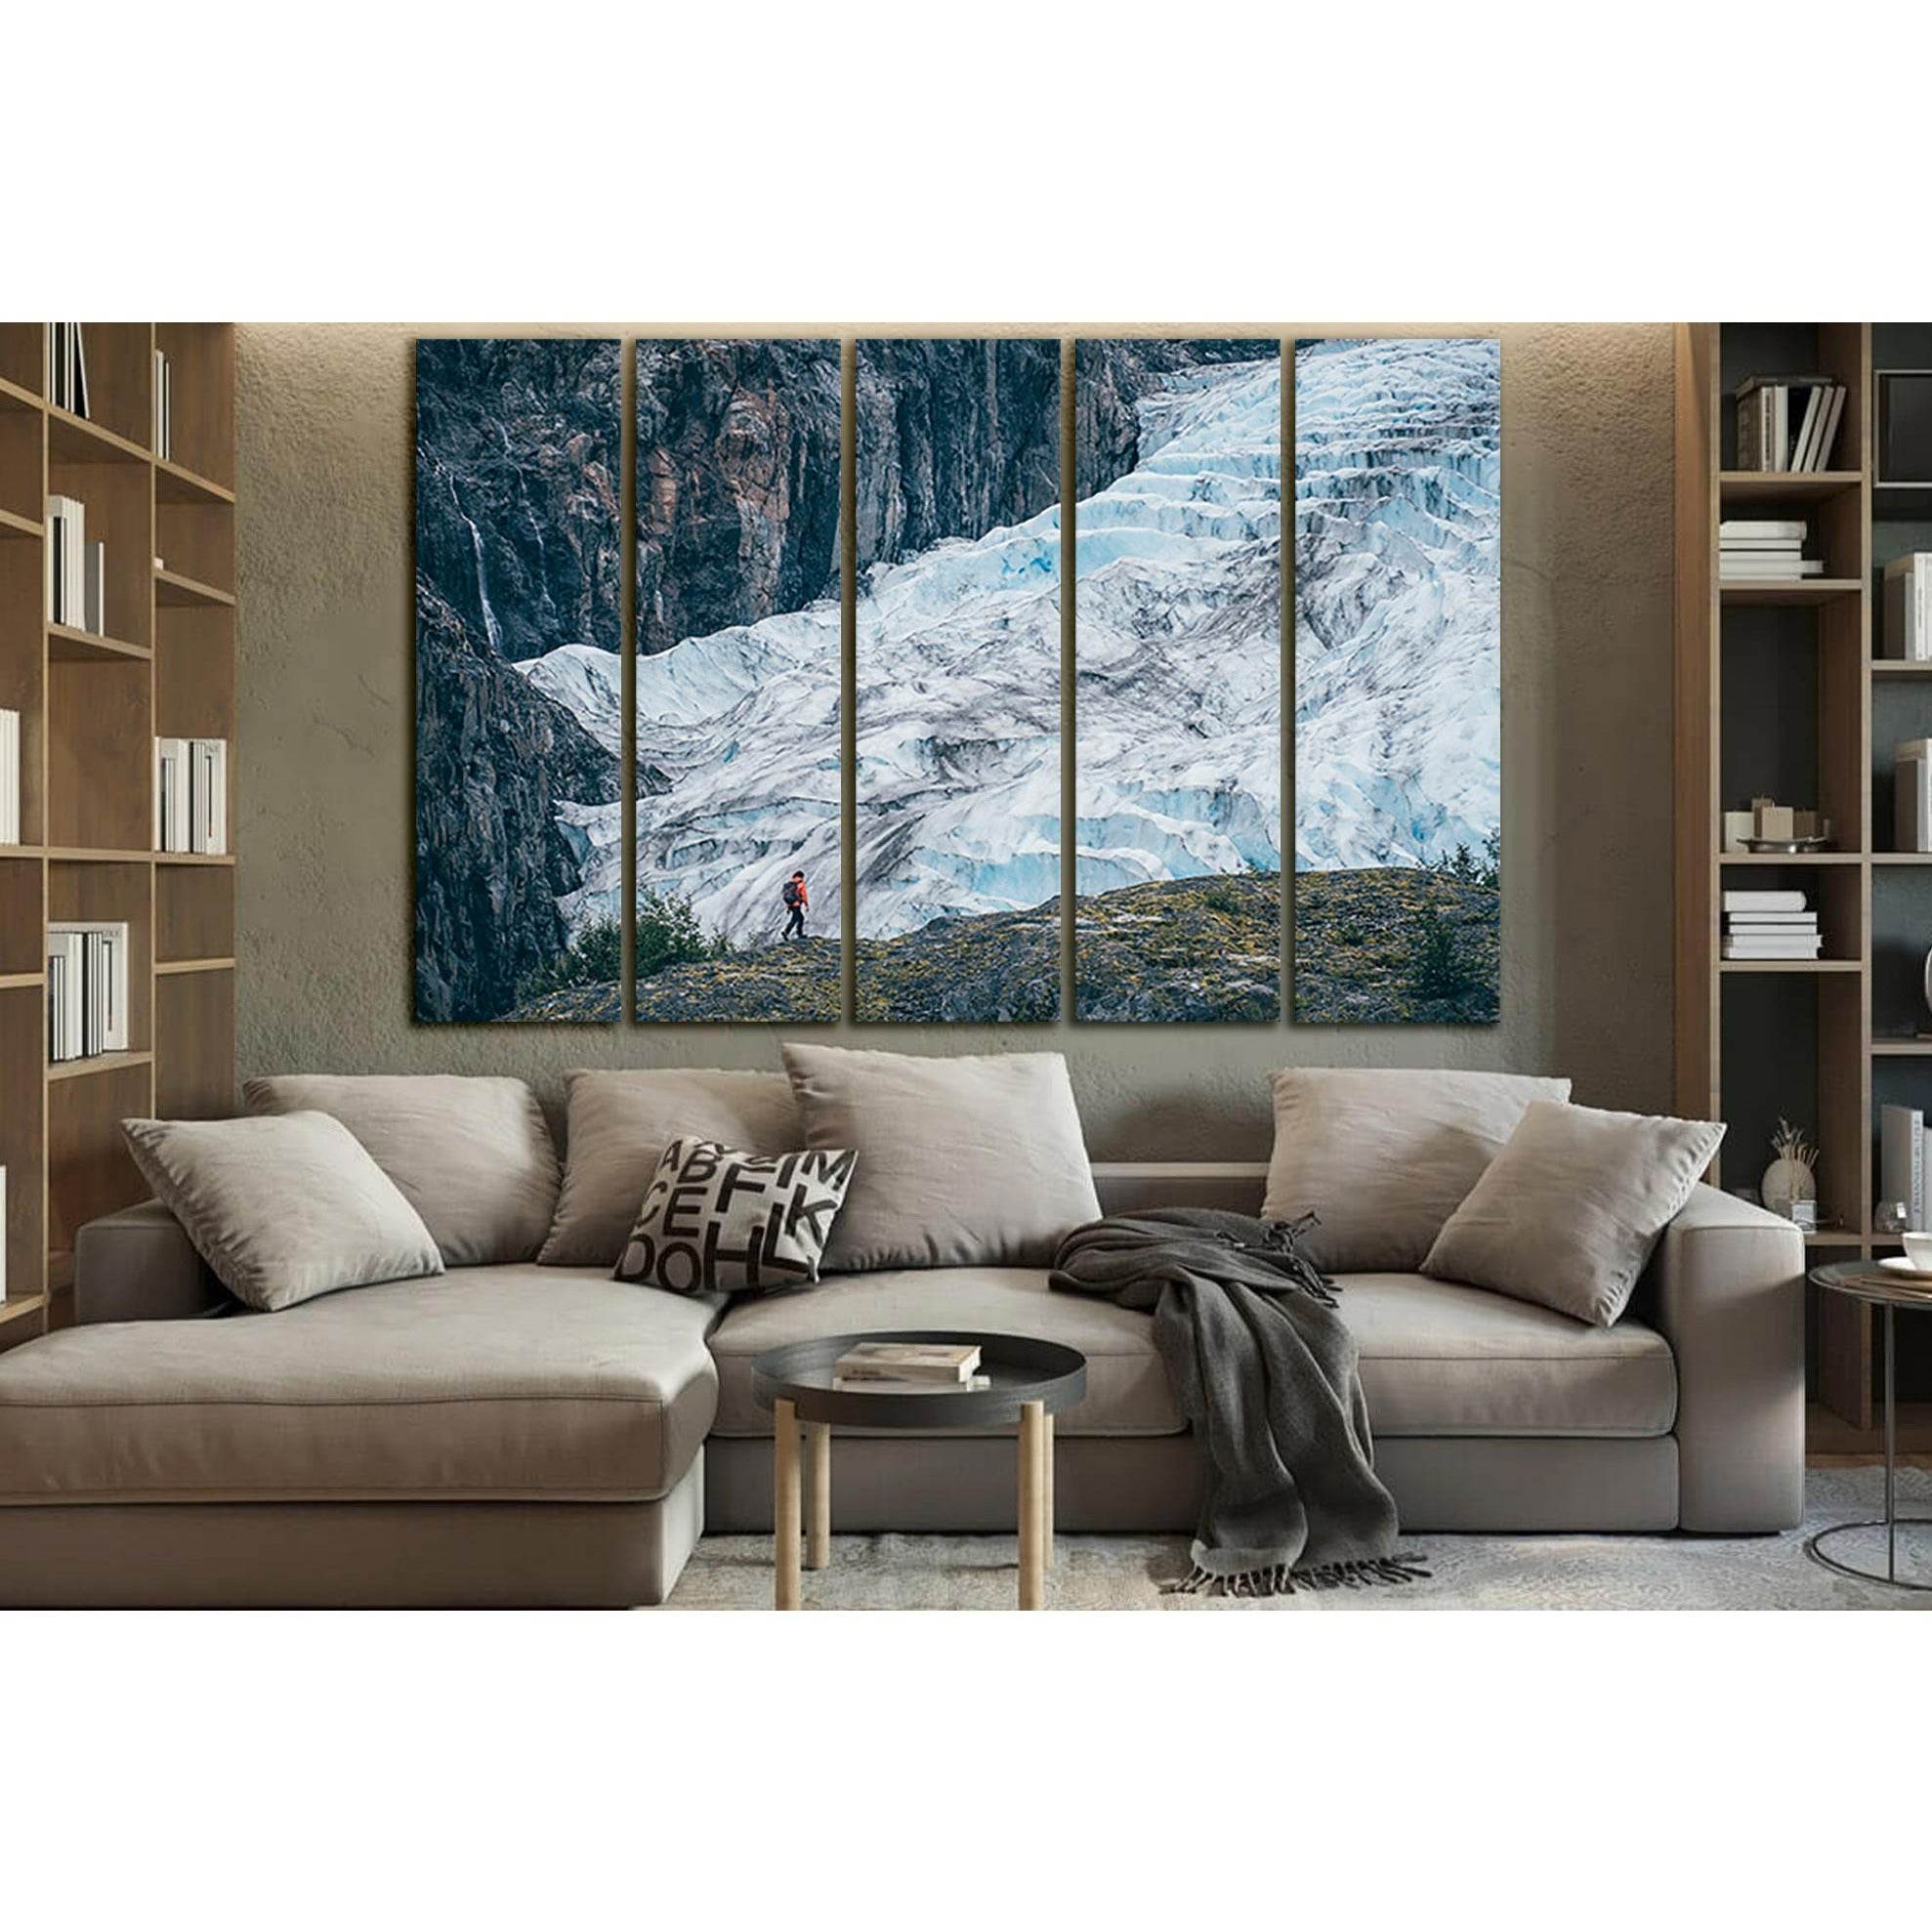 Exit Glacier Seward Alaska №SL1348 Ready to Hang Canvas Print